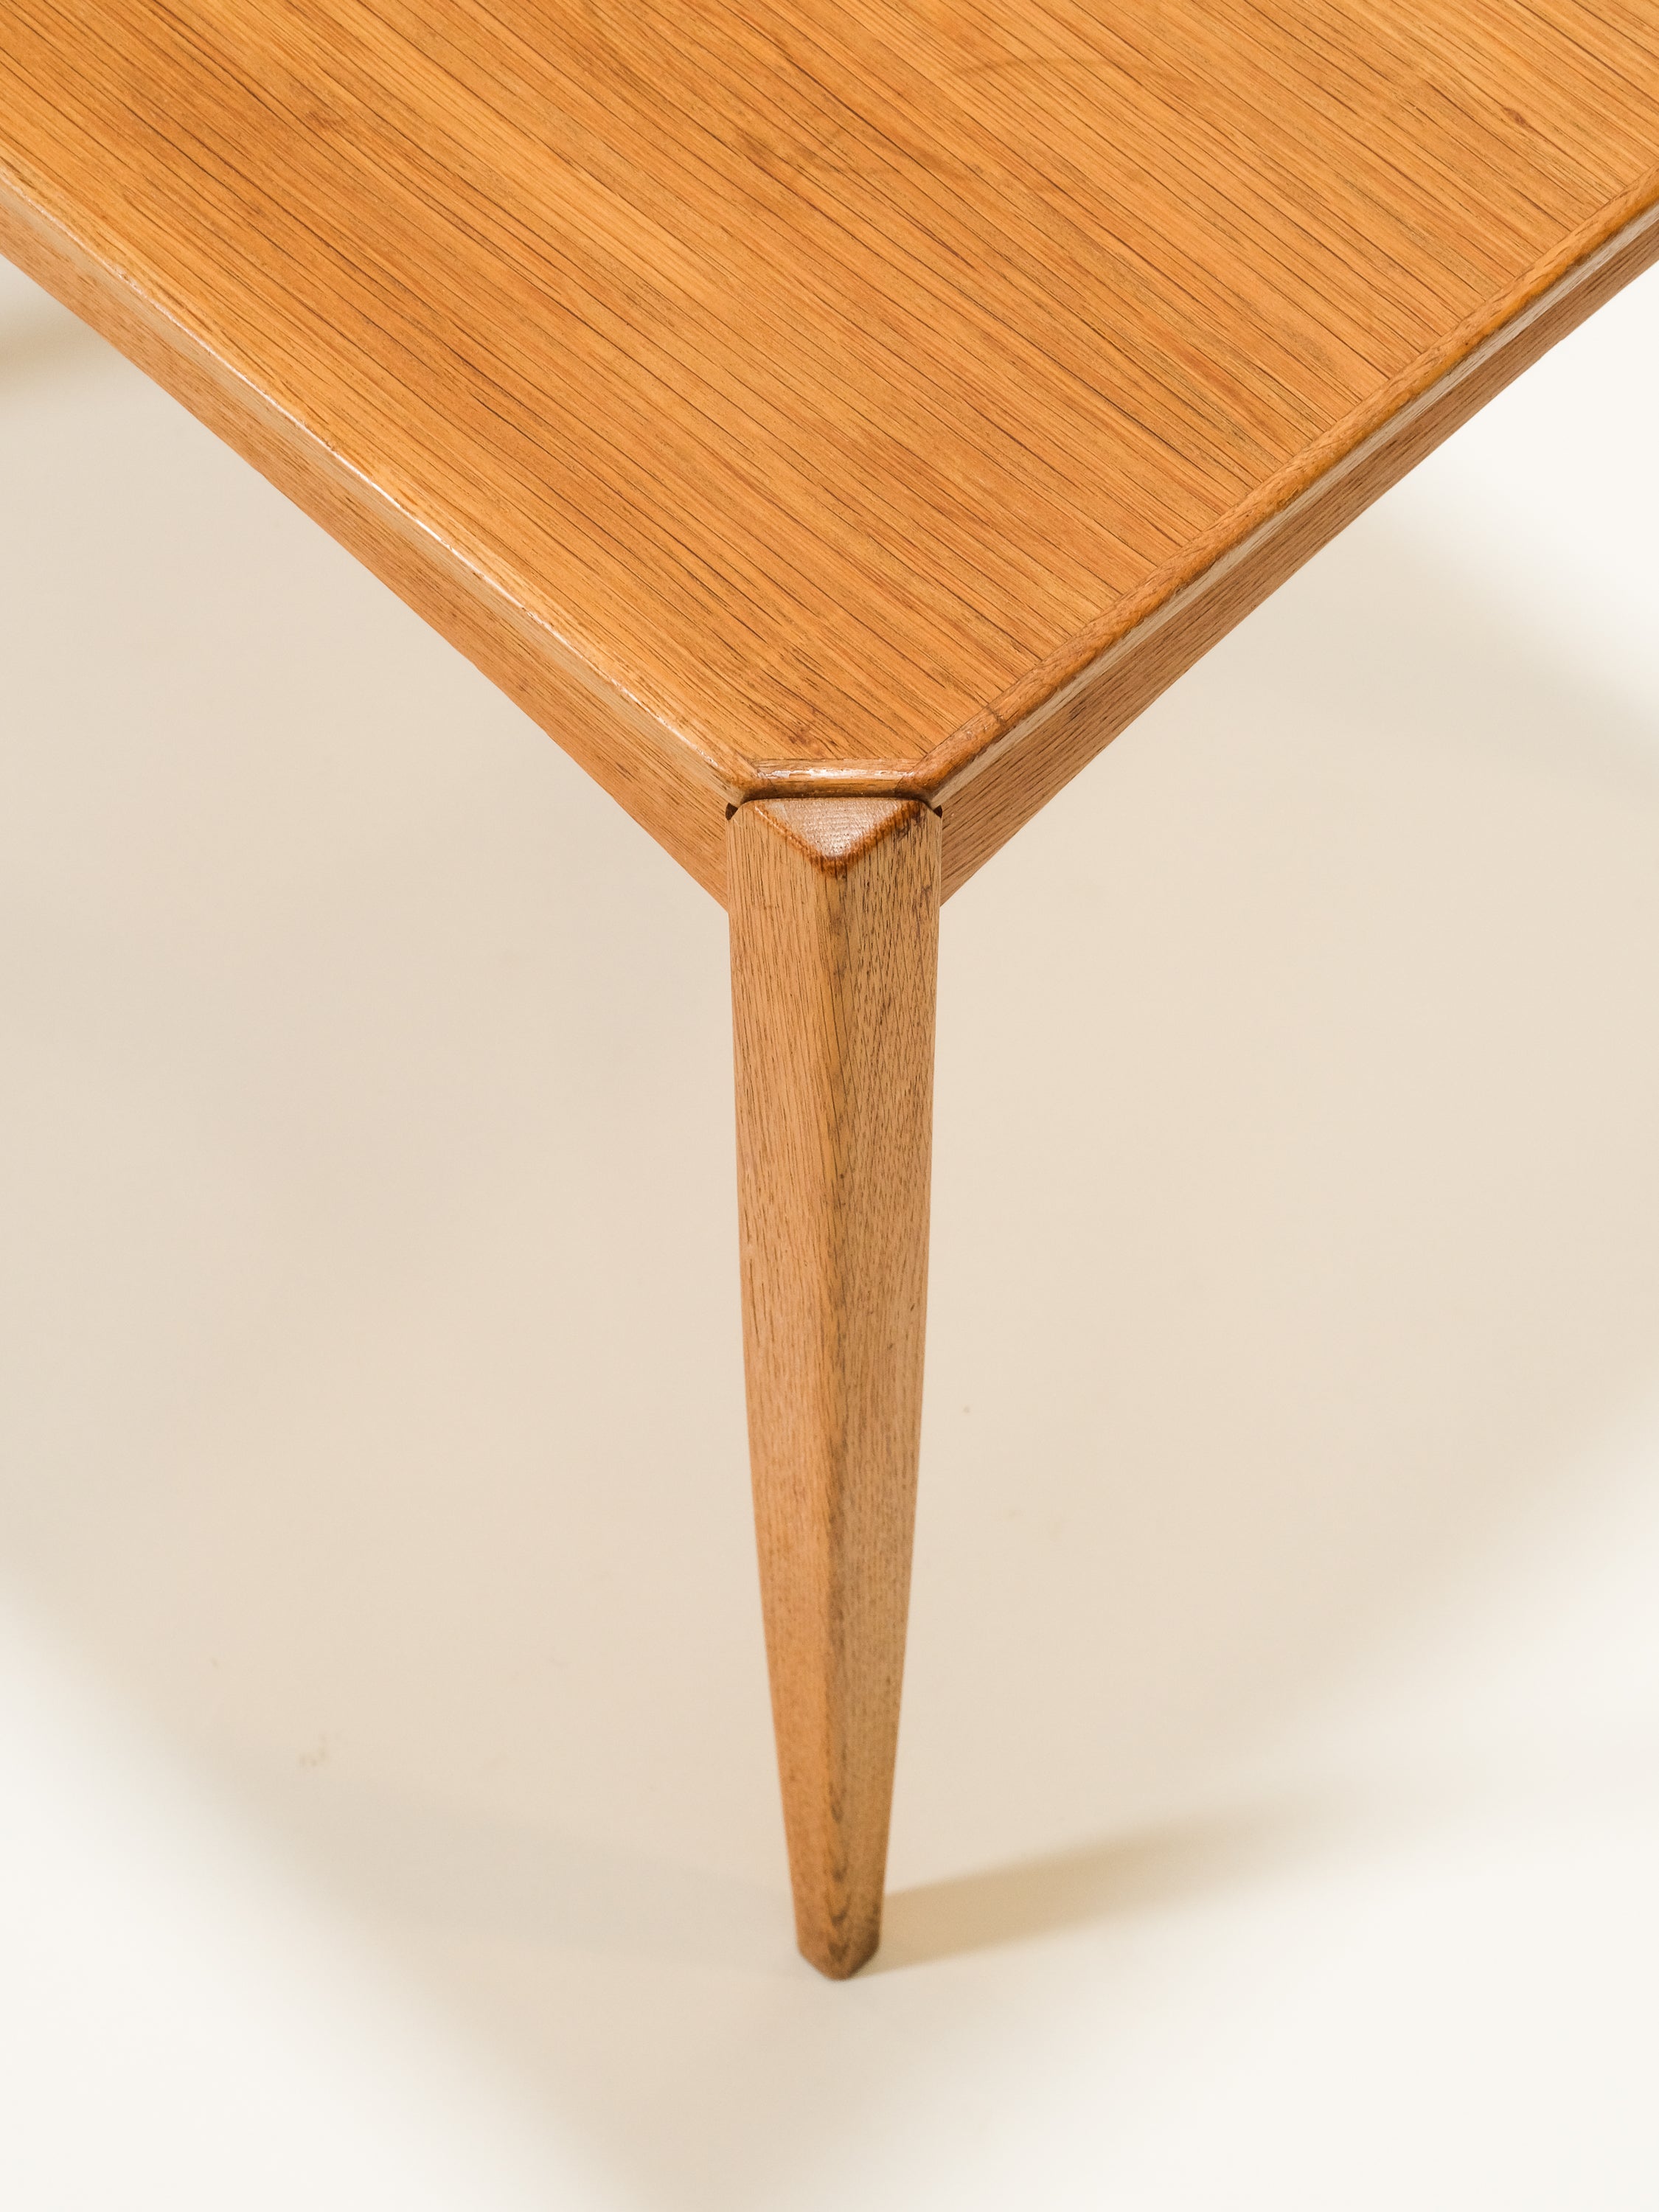 Oak Coffee Table Model "Texas" by Folke Ohlsson, Bra Bohag, Tingströms, 1960s